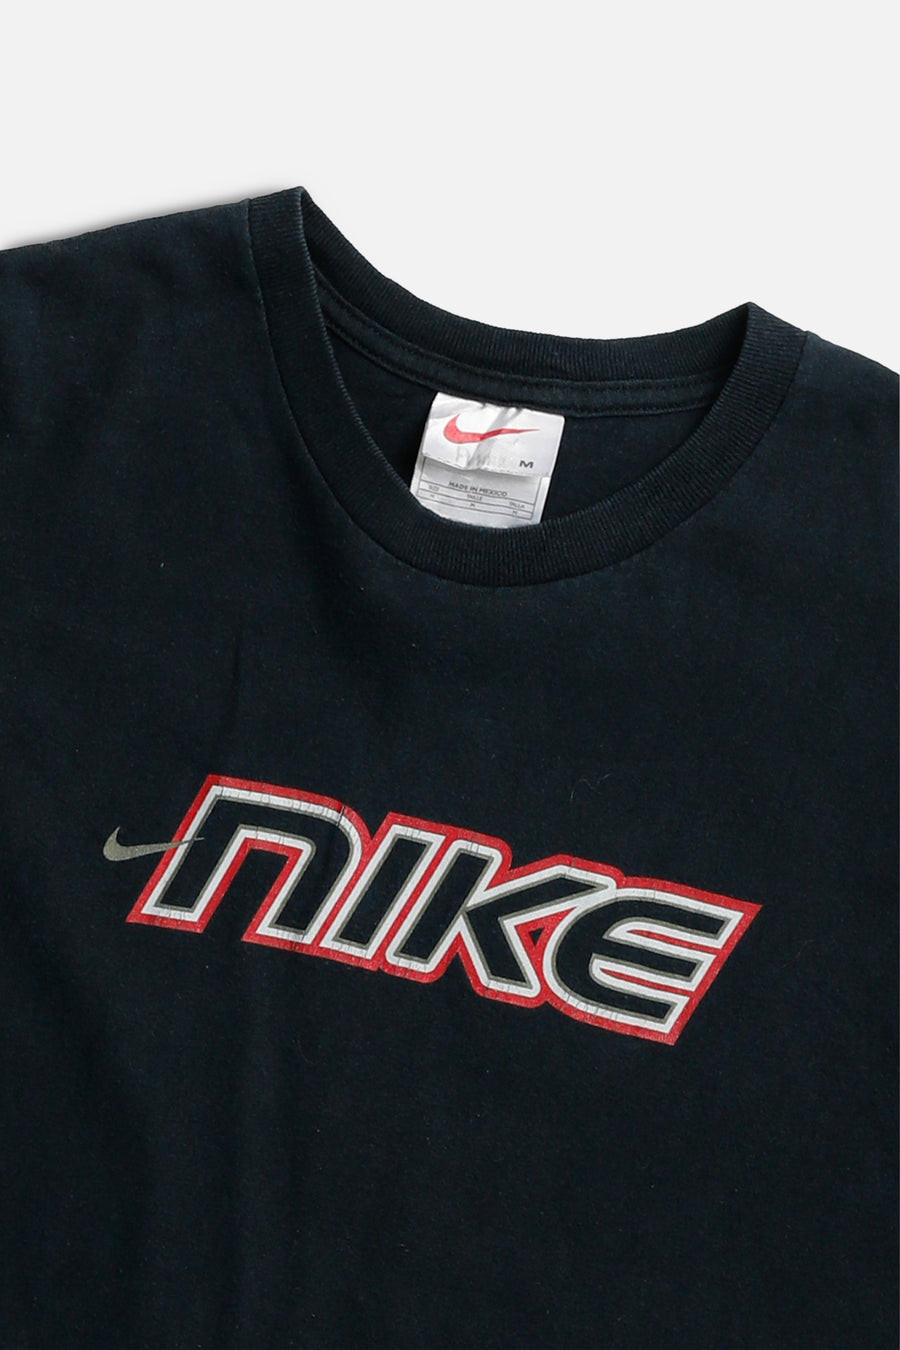 Vintage Nike Tee - XS